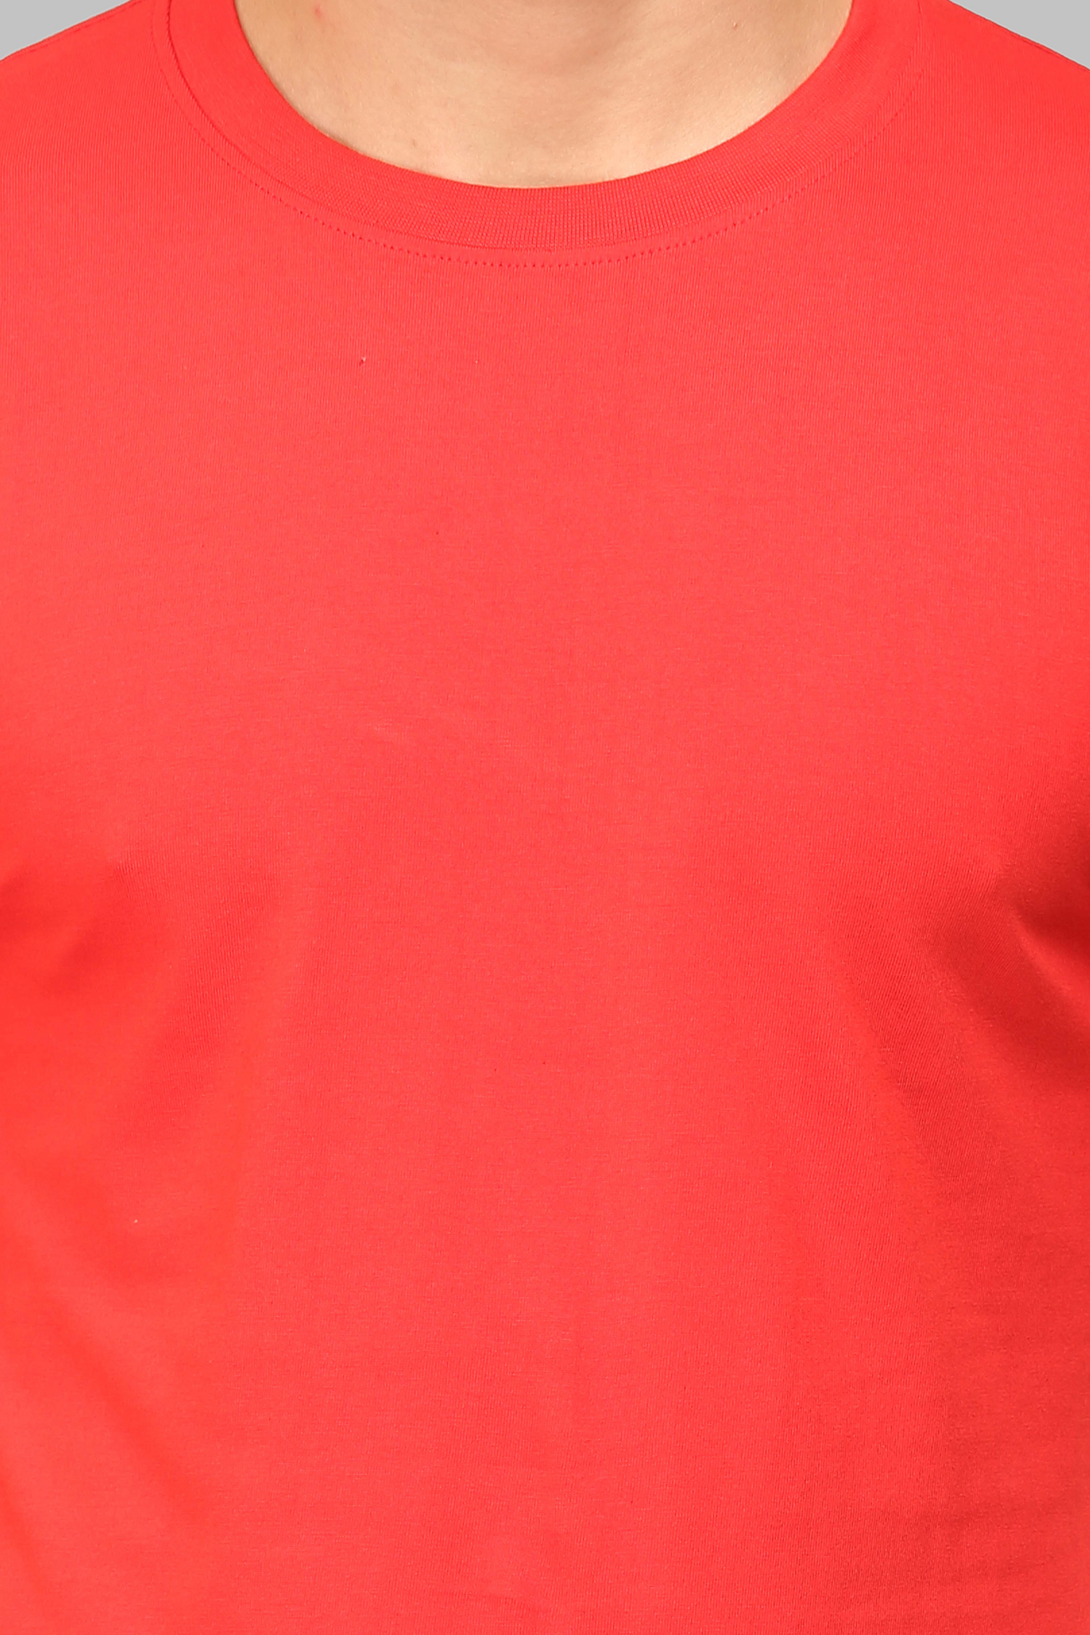 Red T-Shirt For Men - WowWaves - 4